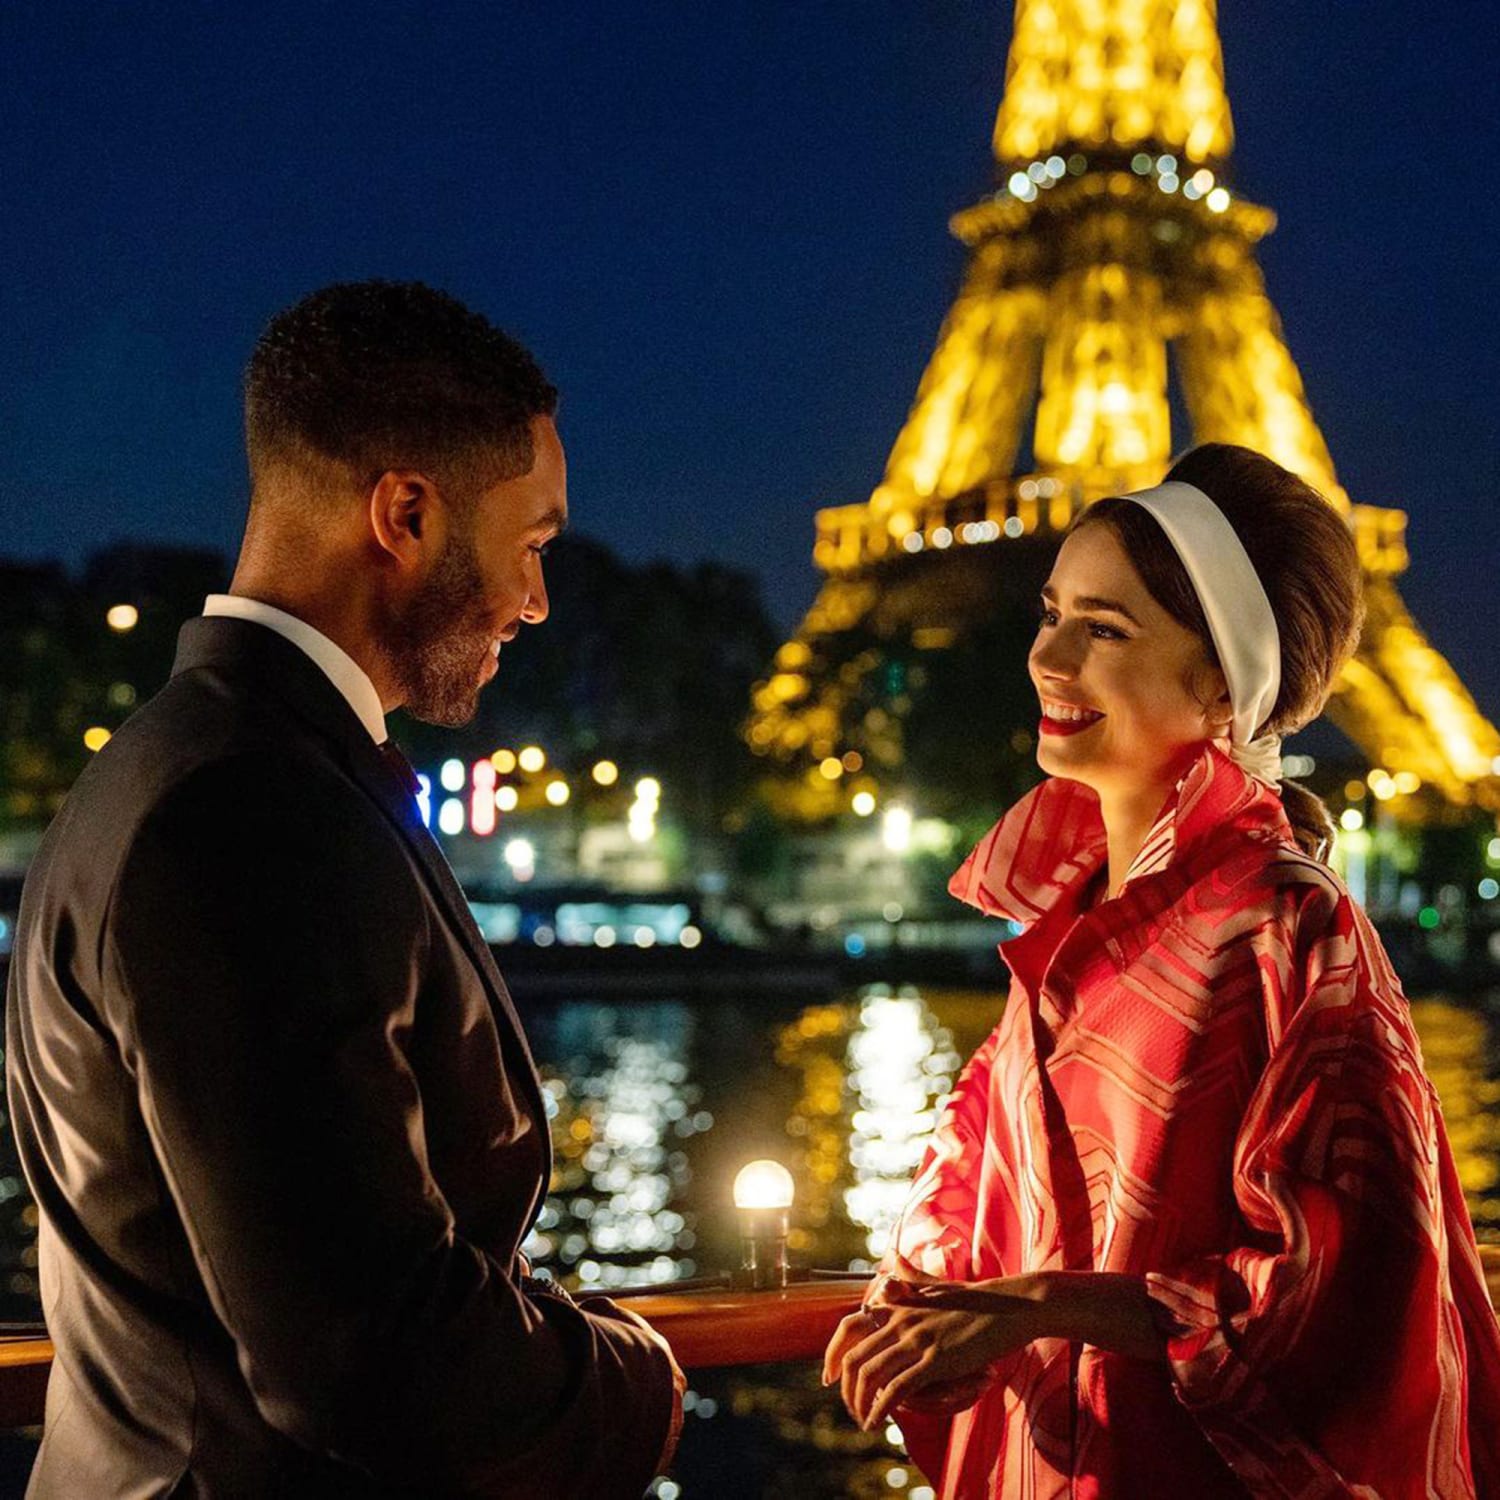 Emily in Paris' Season 3 Cast: Meet The New Love Interests - Netflix Tudum